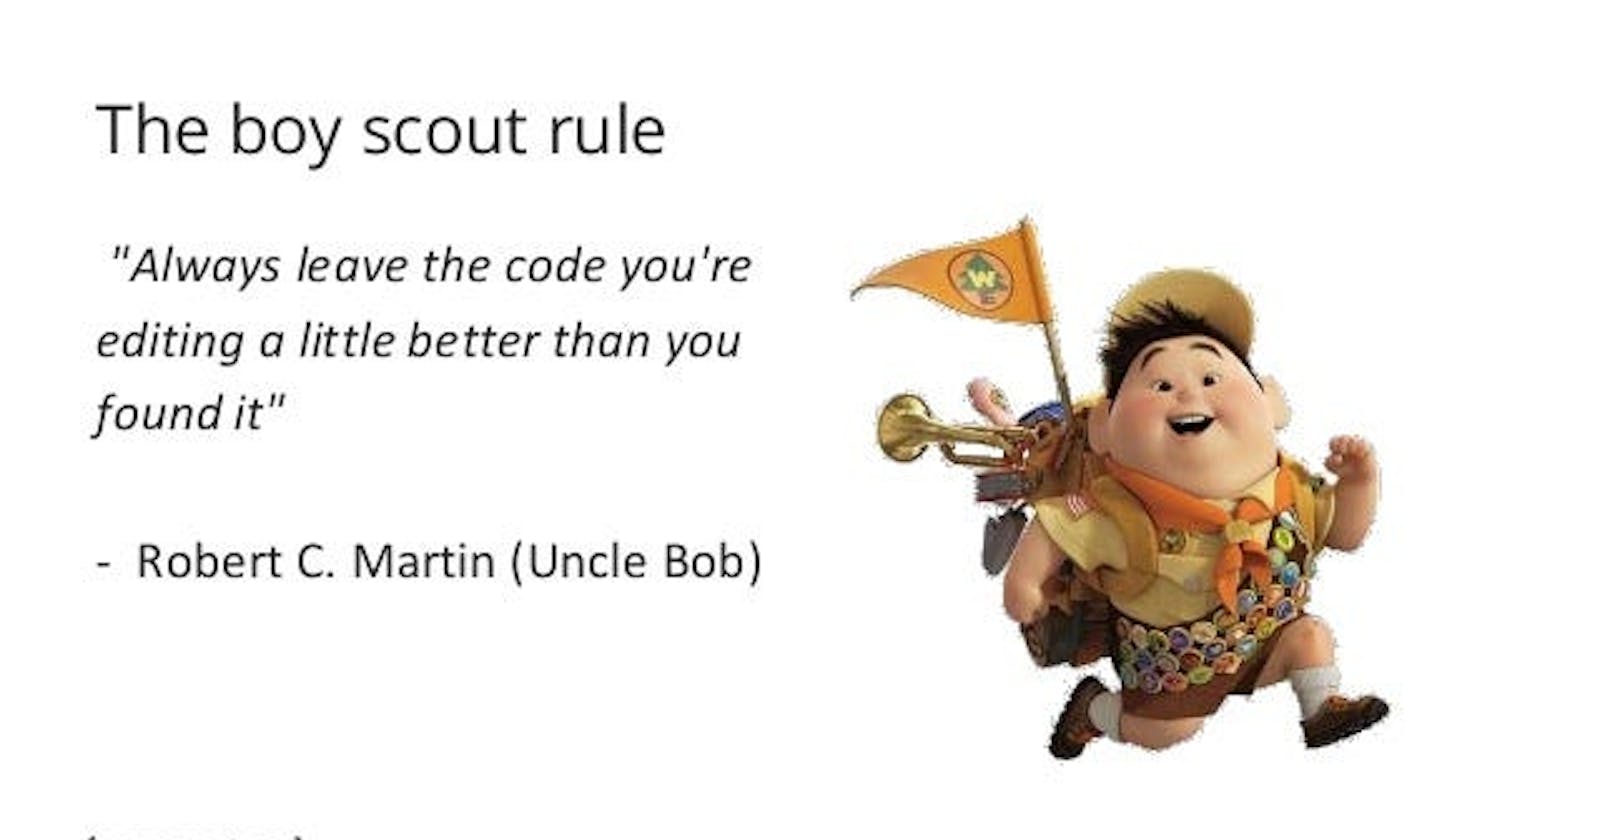 The Boy Scout Rule